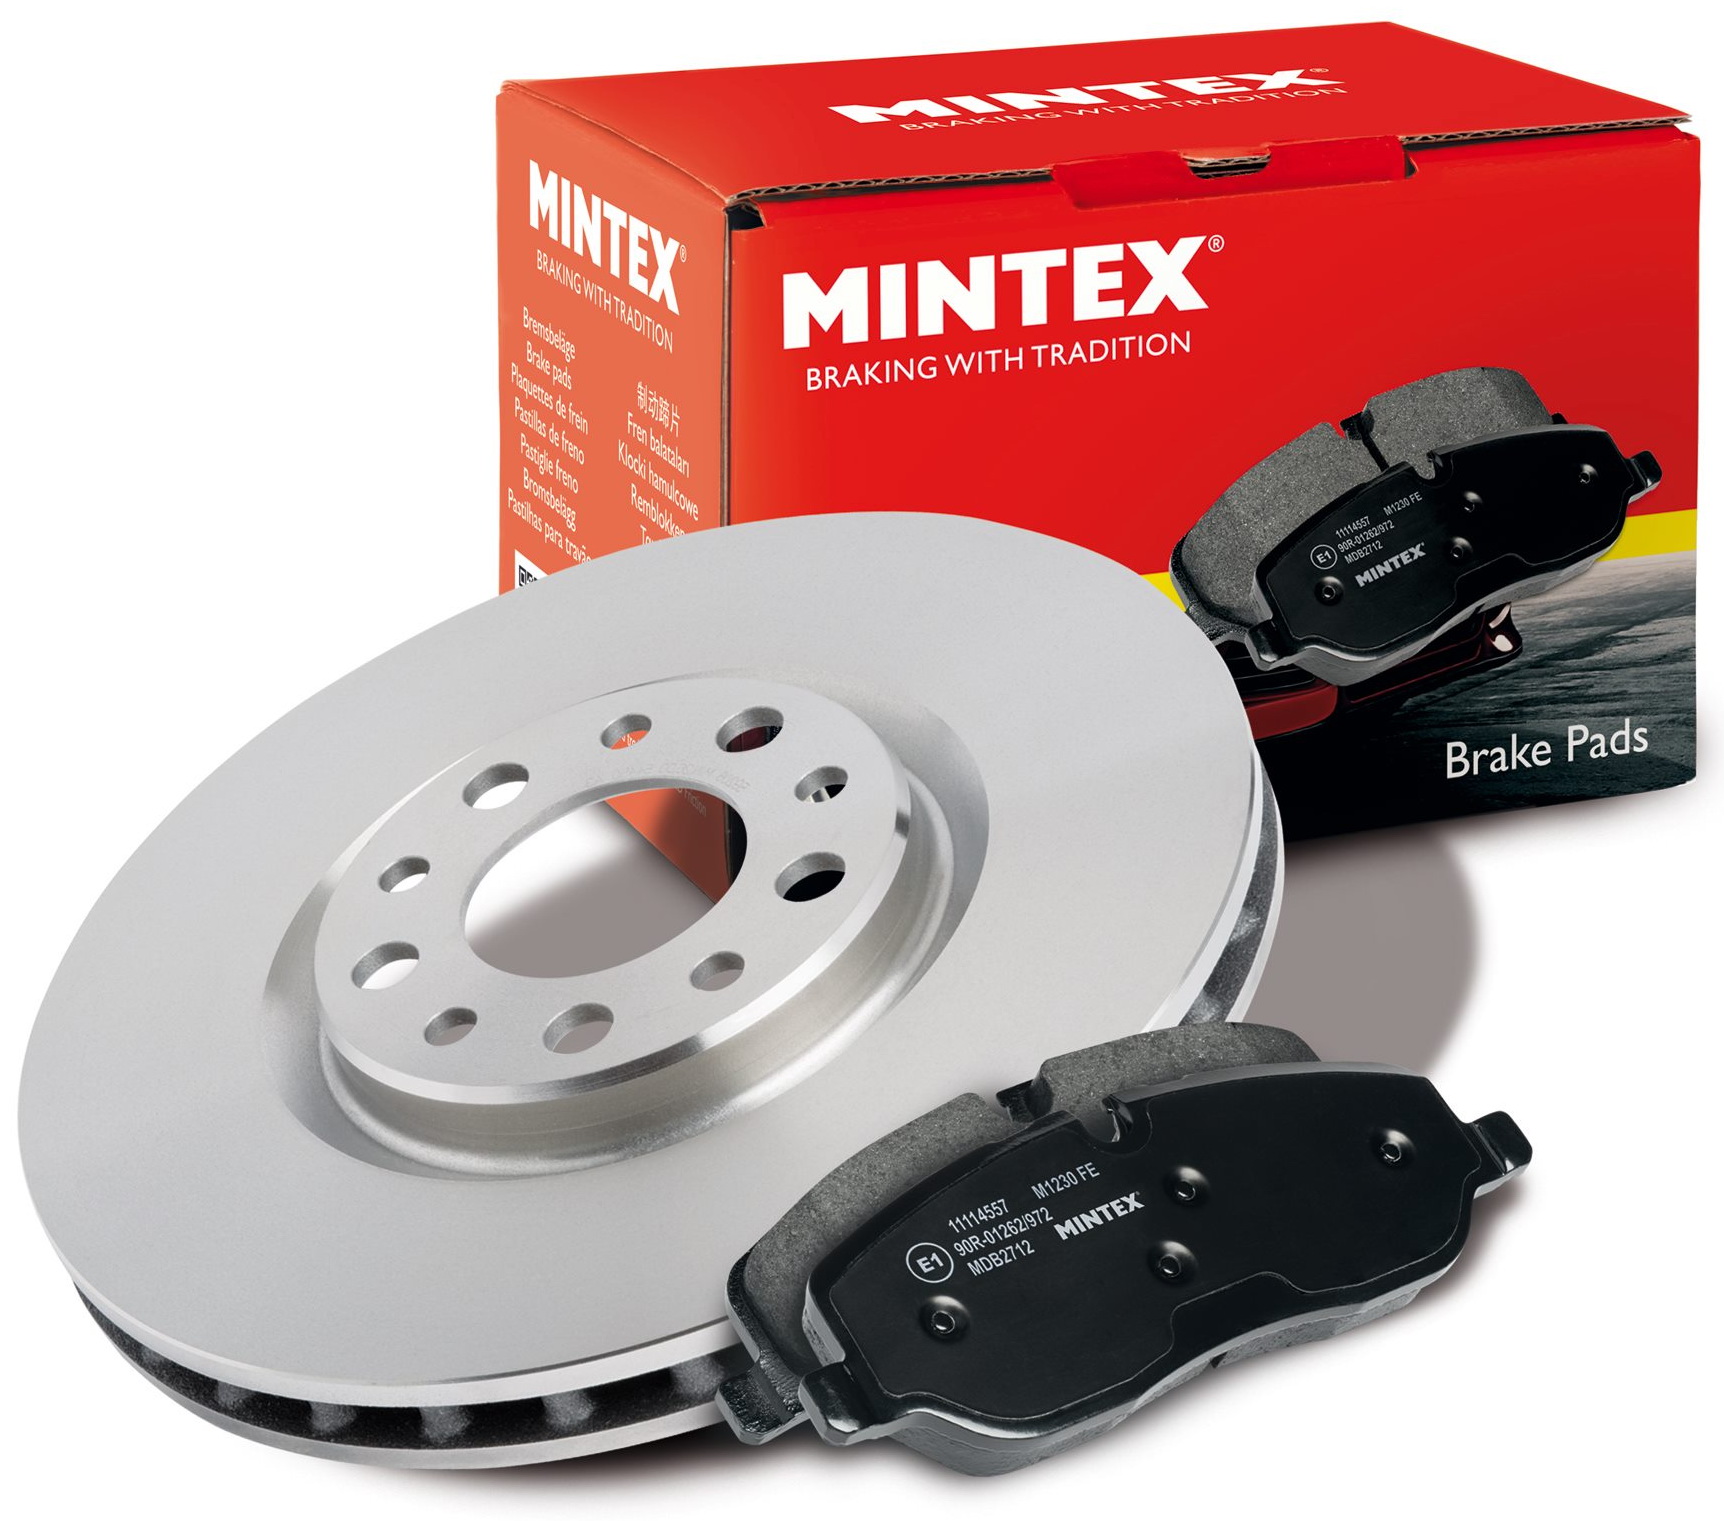 Mintex, braking with tradition